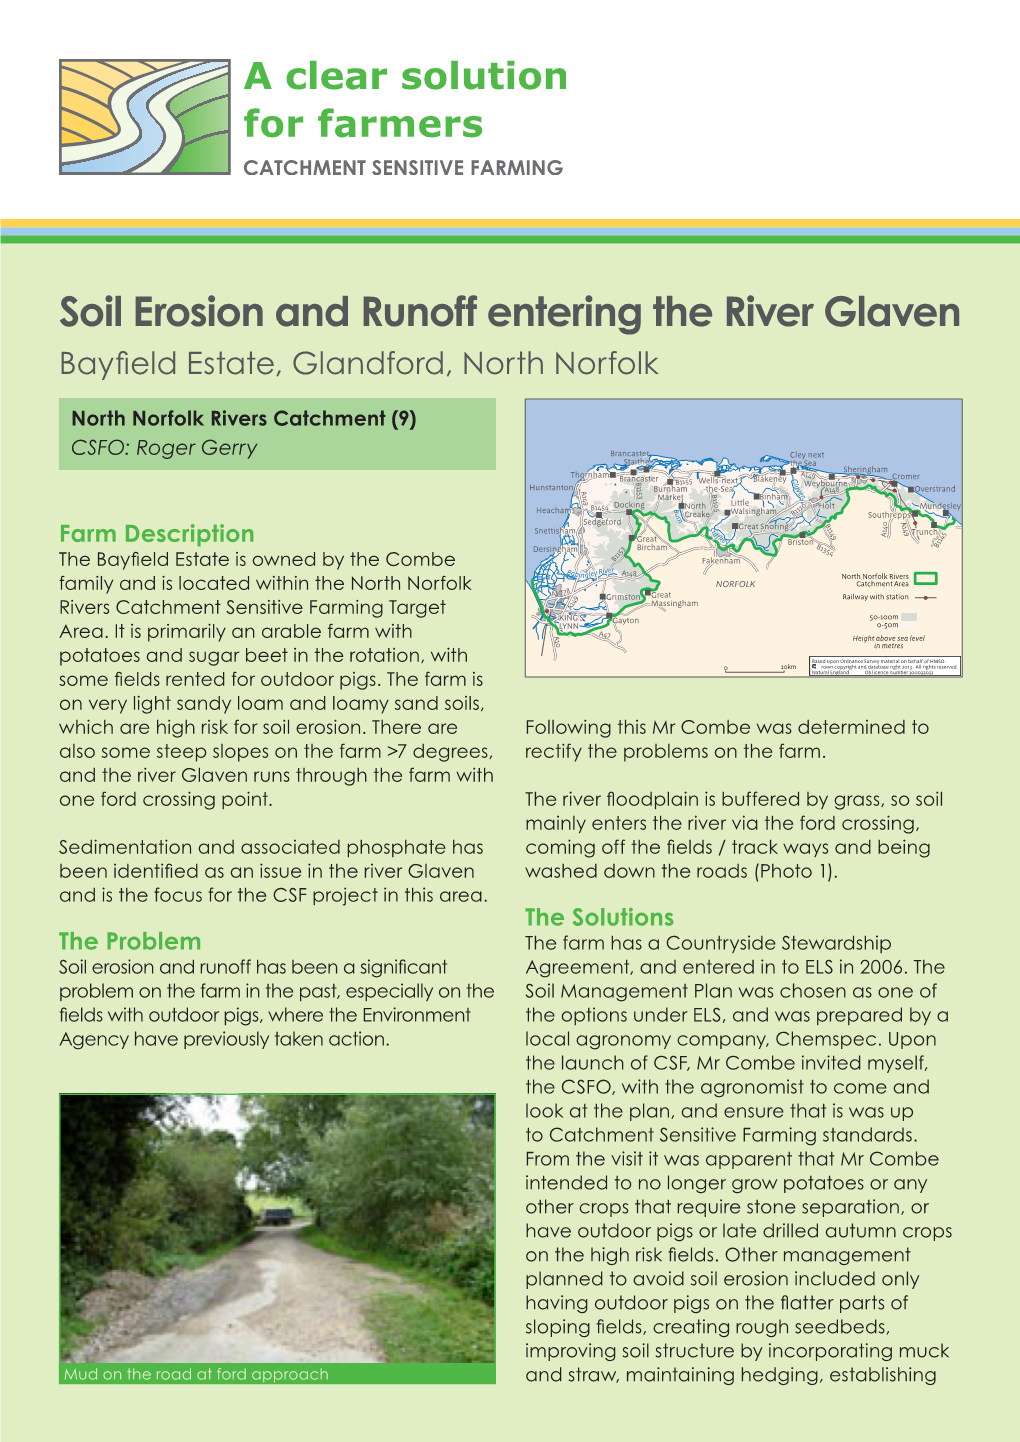 Soil Erosion and Runoff Entering the River Glaven Bayfield Estate, Glandford, North Norfolk